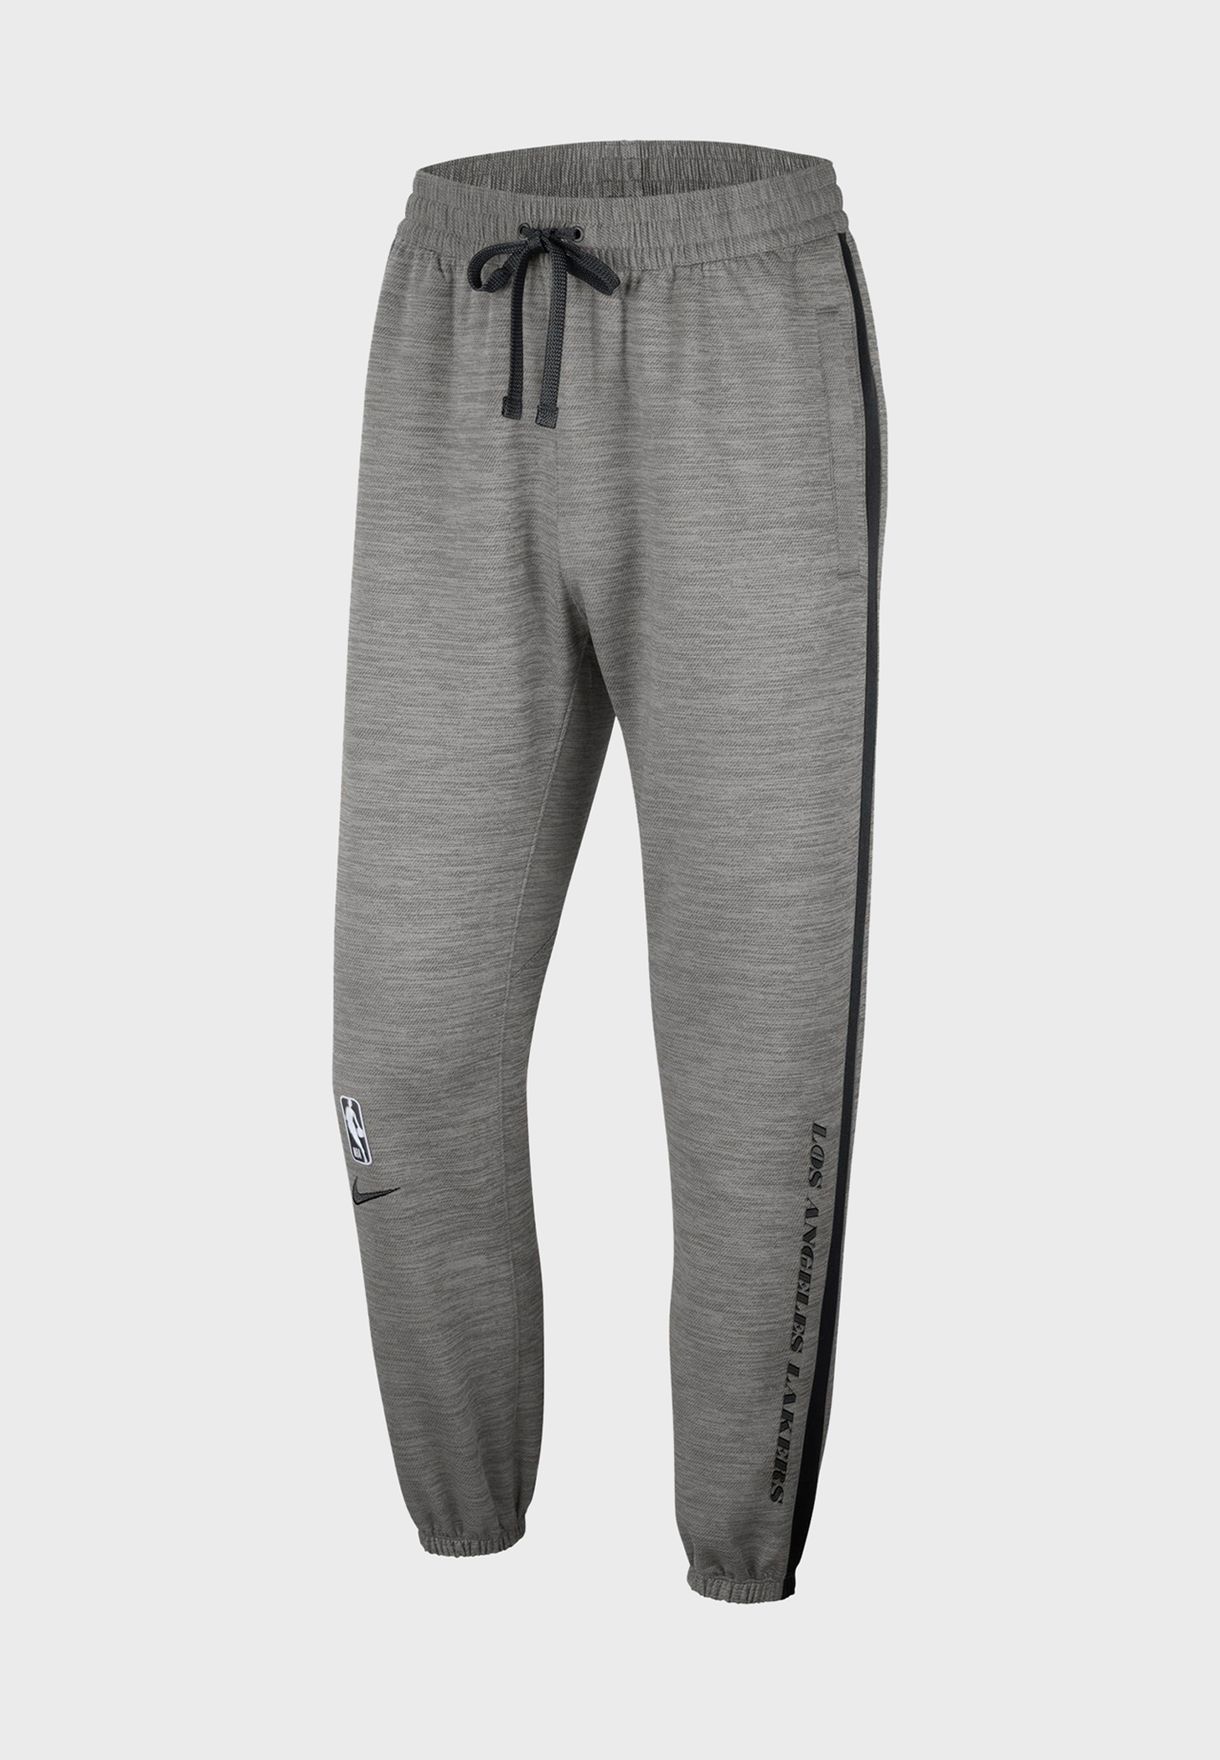 nike grey sweatpants with elastic ankles